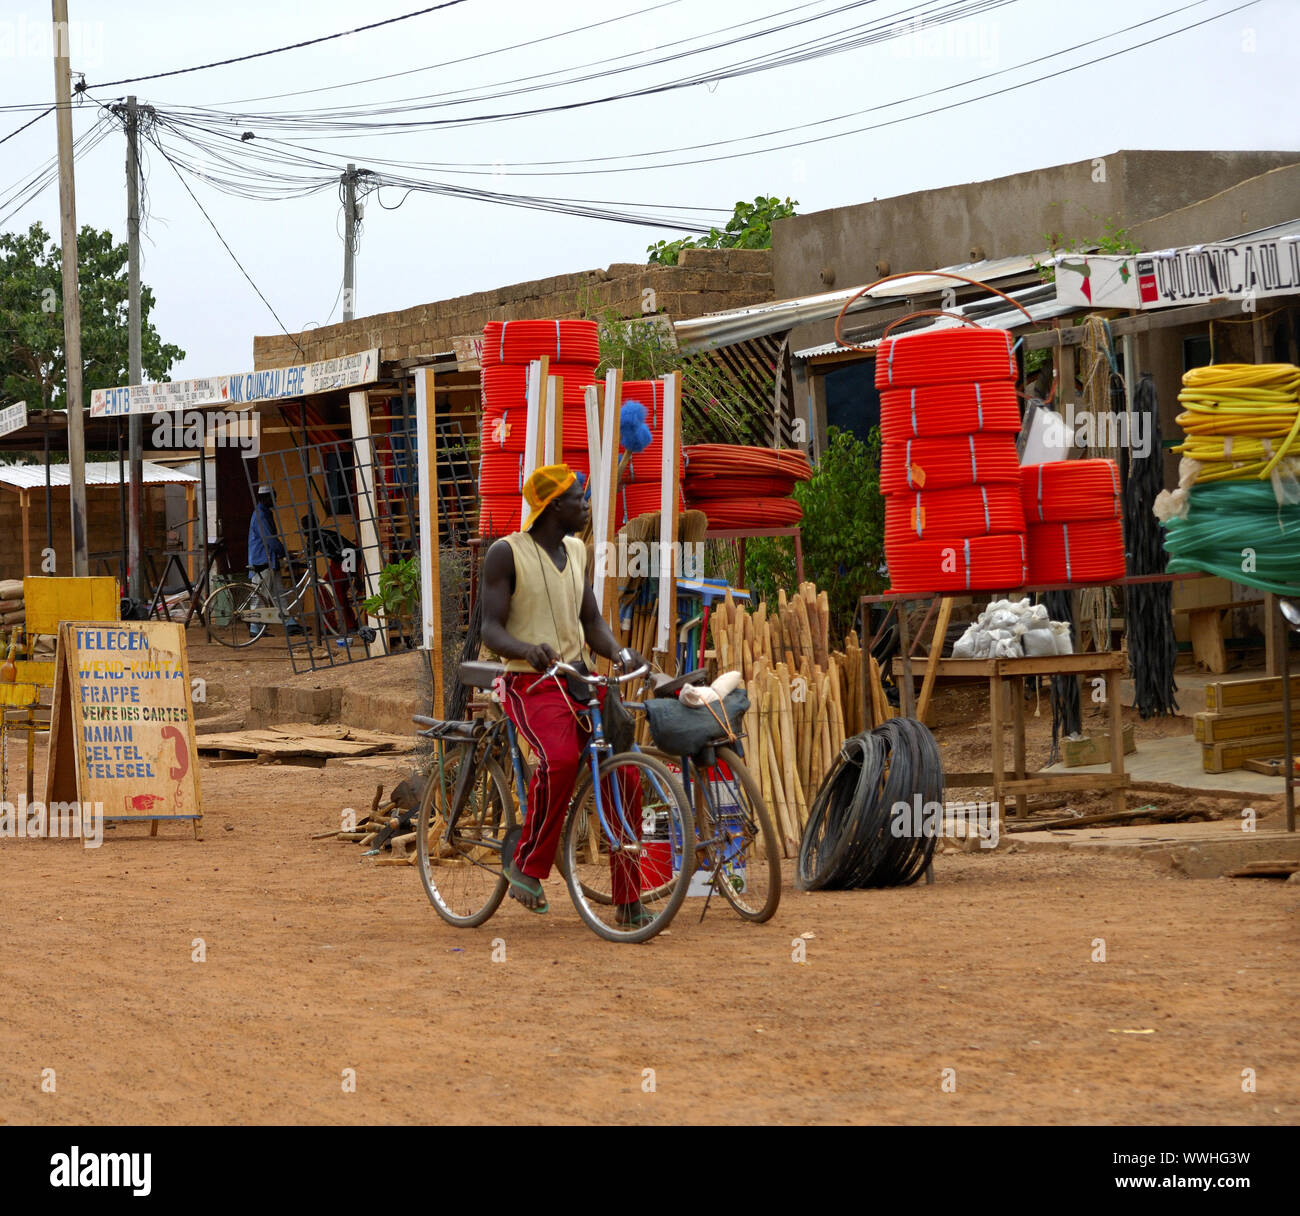 Specialized trade for building materials in Ouagadougou Stock Photo